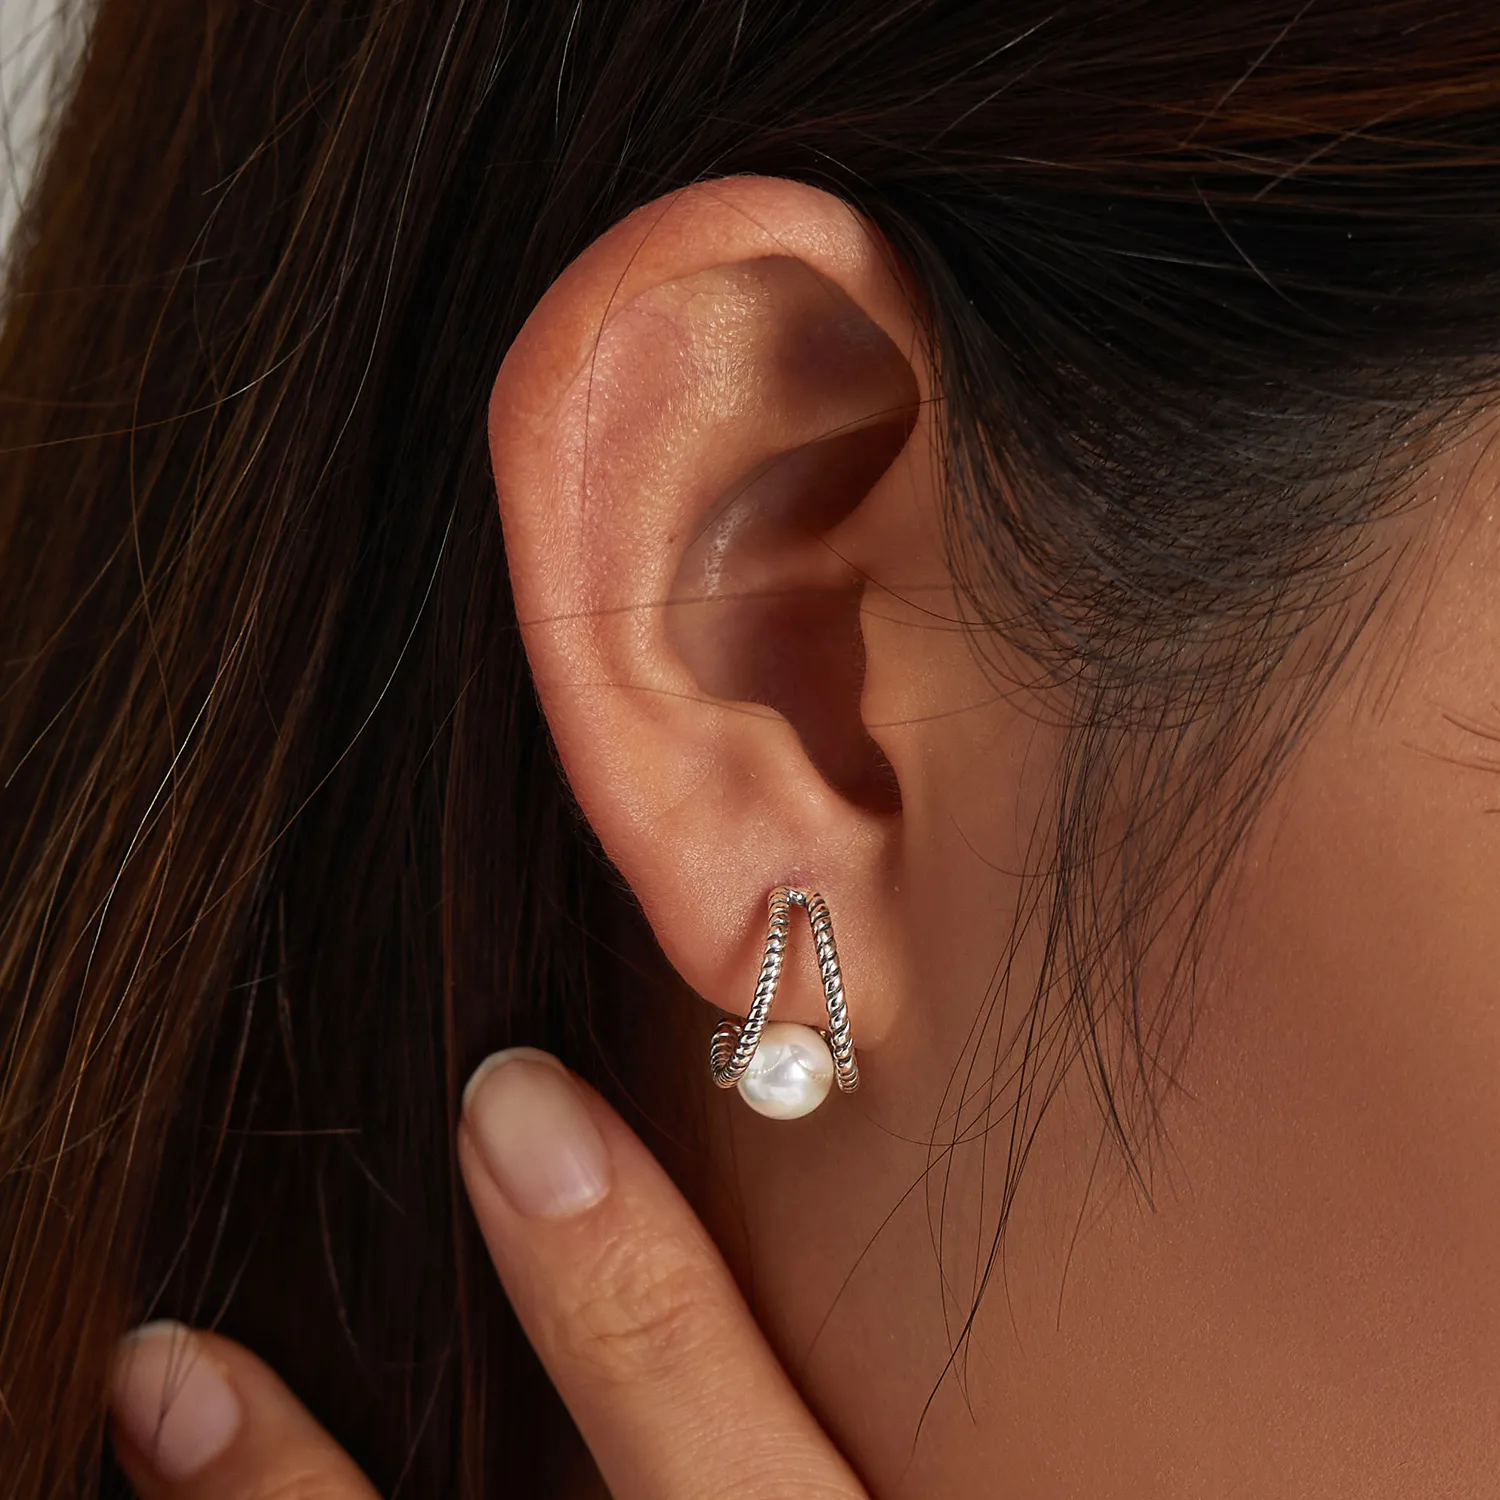 Pandora Style Simple Geometric Shell Beads Stud Earrings - BSE539